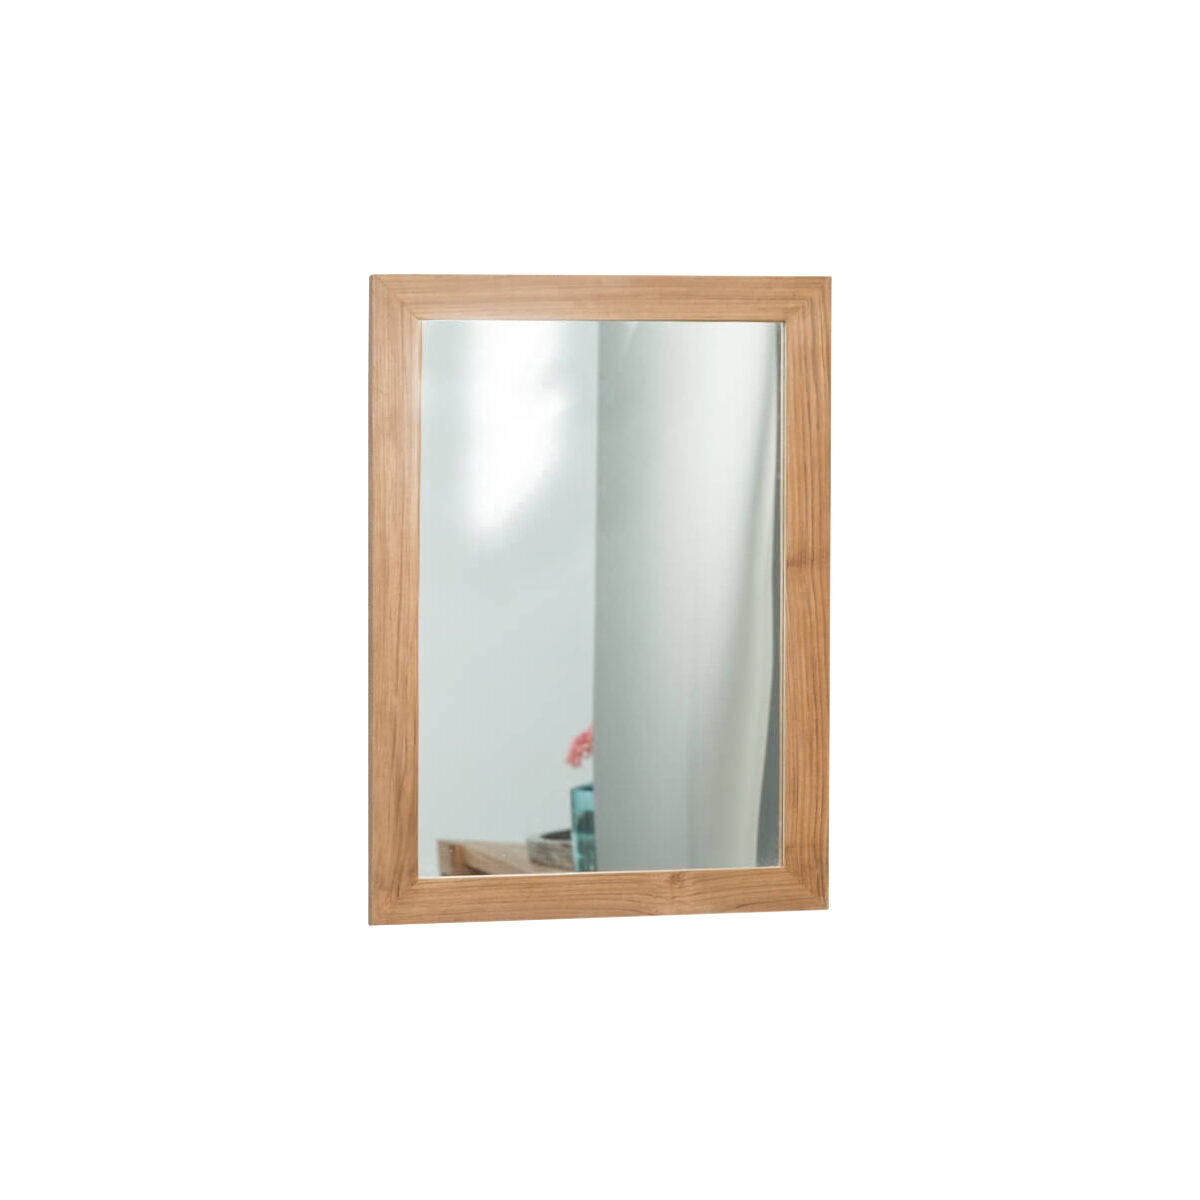 Wanda Collection Miroir rectangle en teck massif 70x50